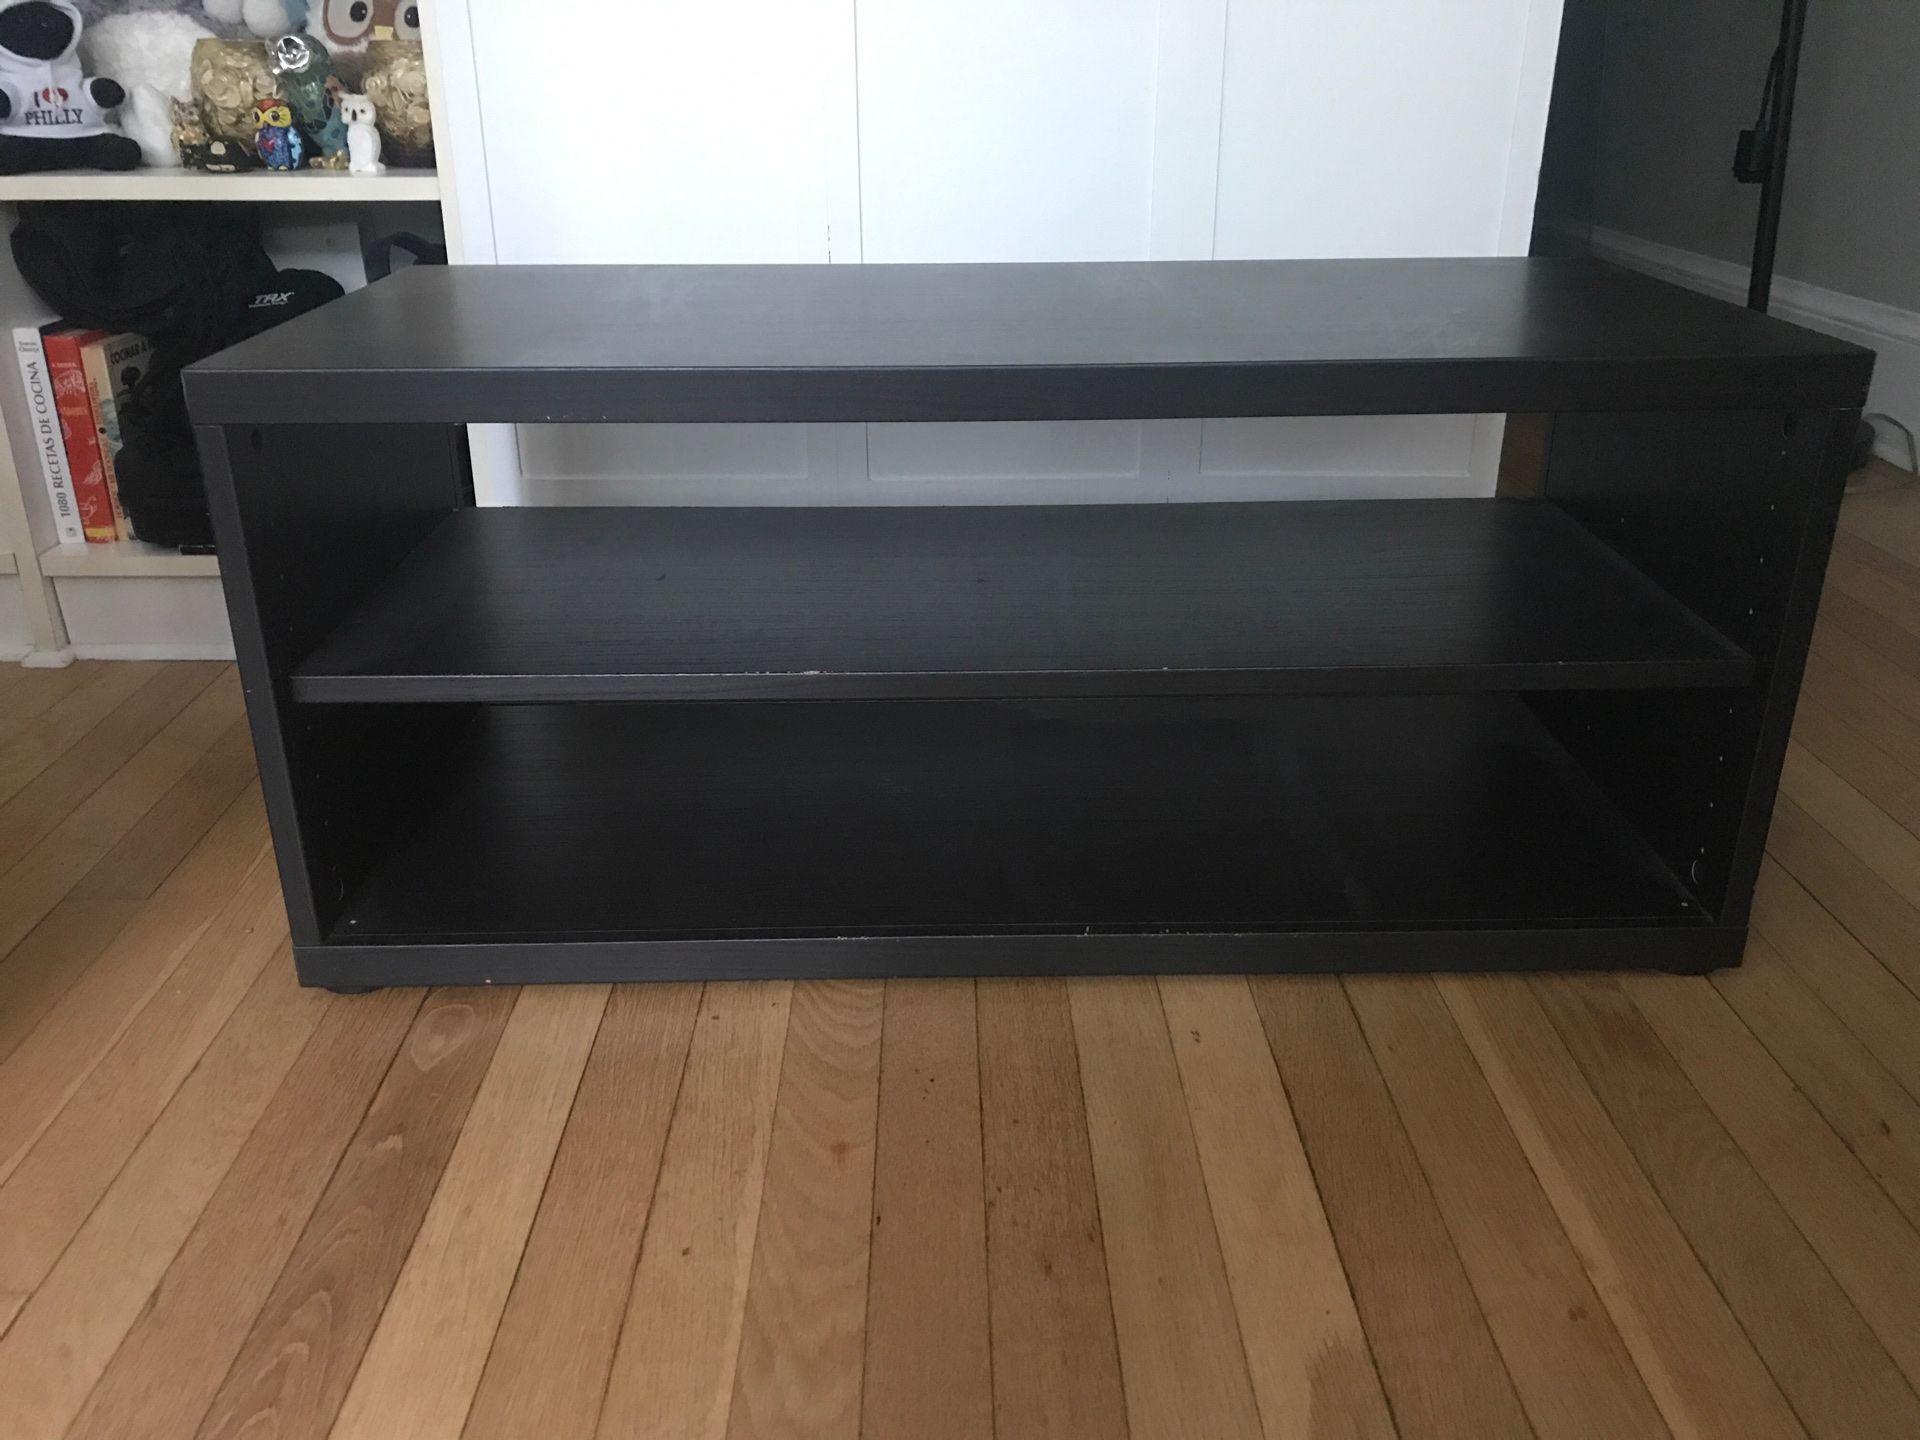 Ikea TV stand